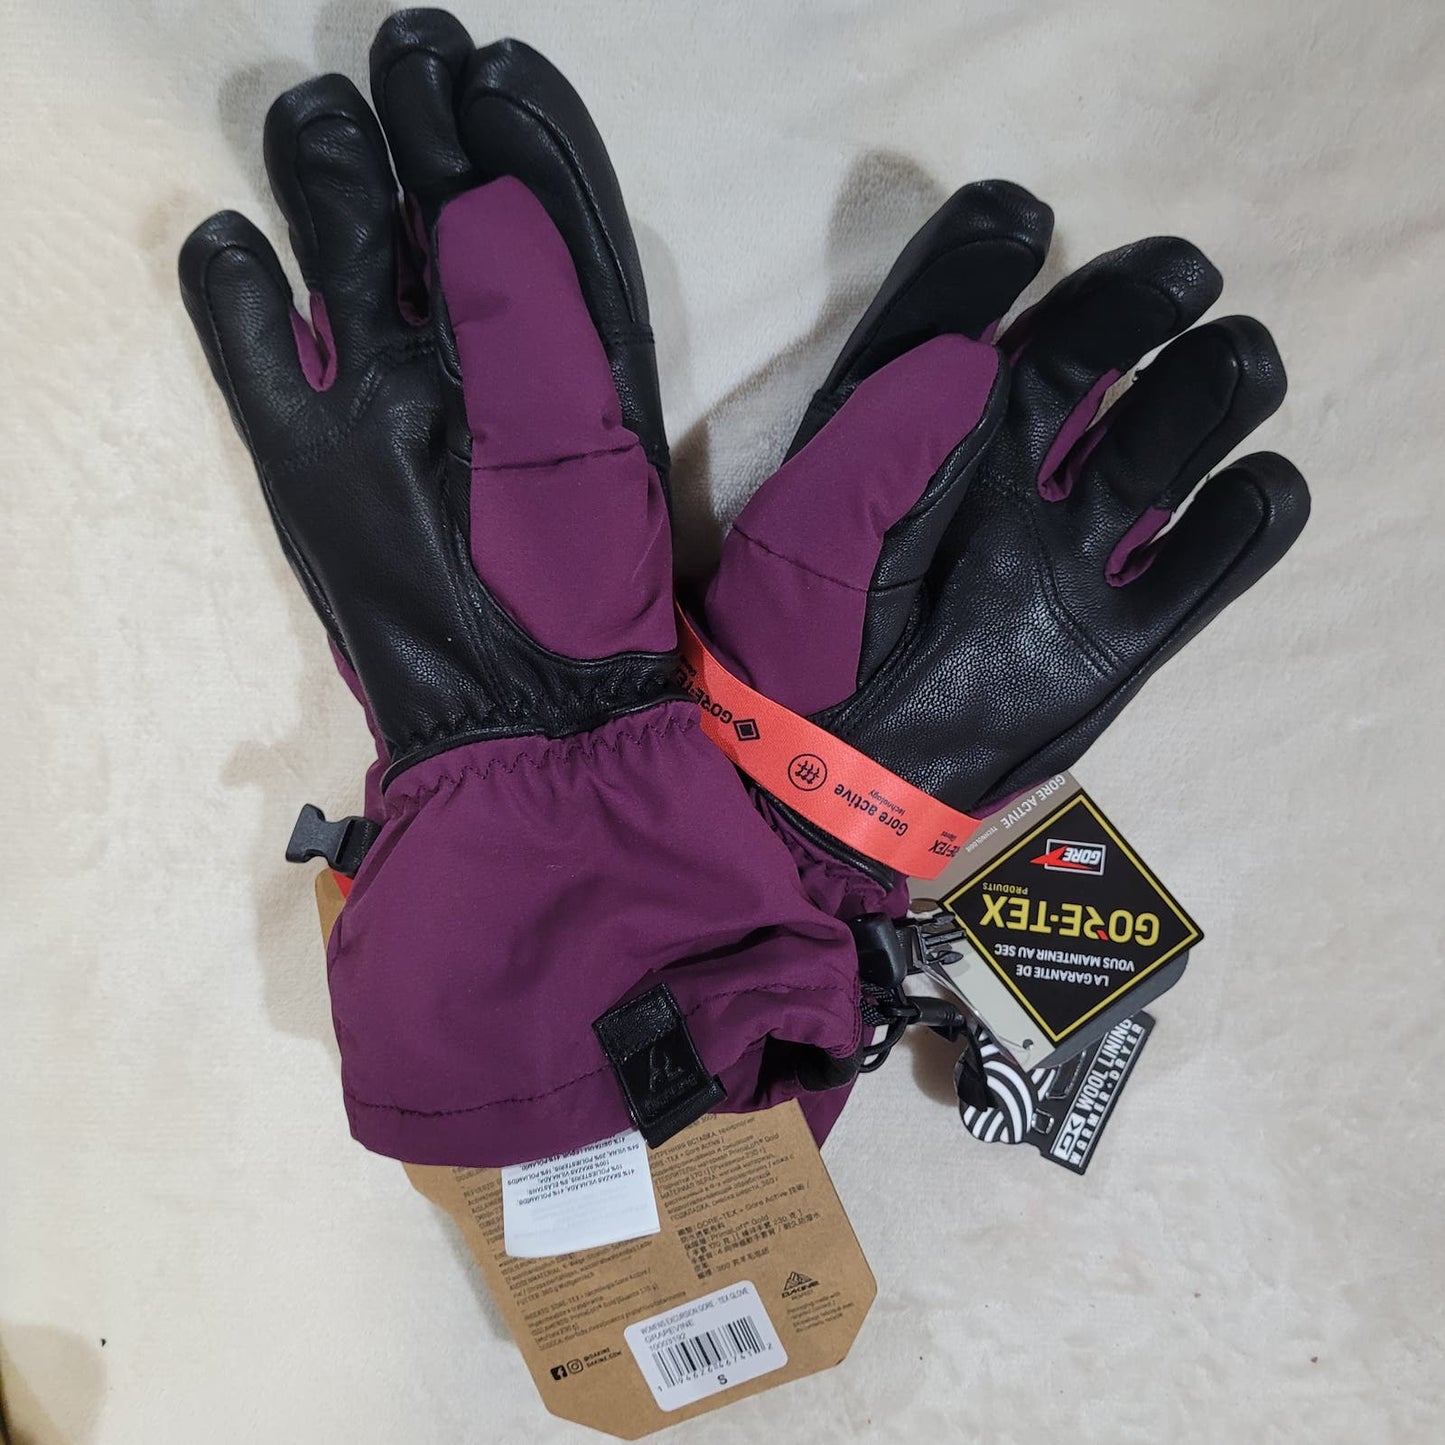 Dakine Excursion Gore-Tex Gloves - Size Small